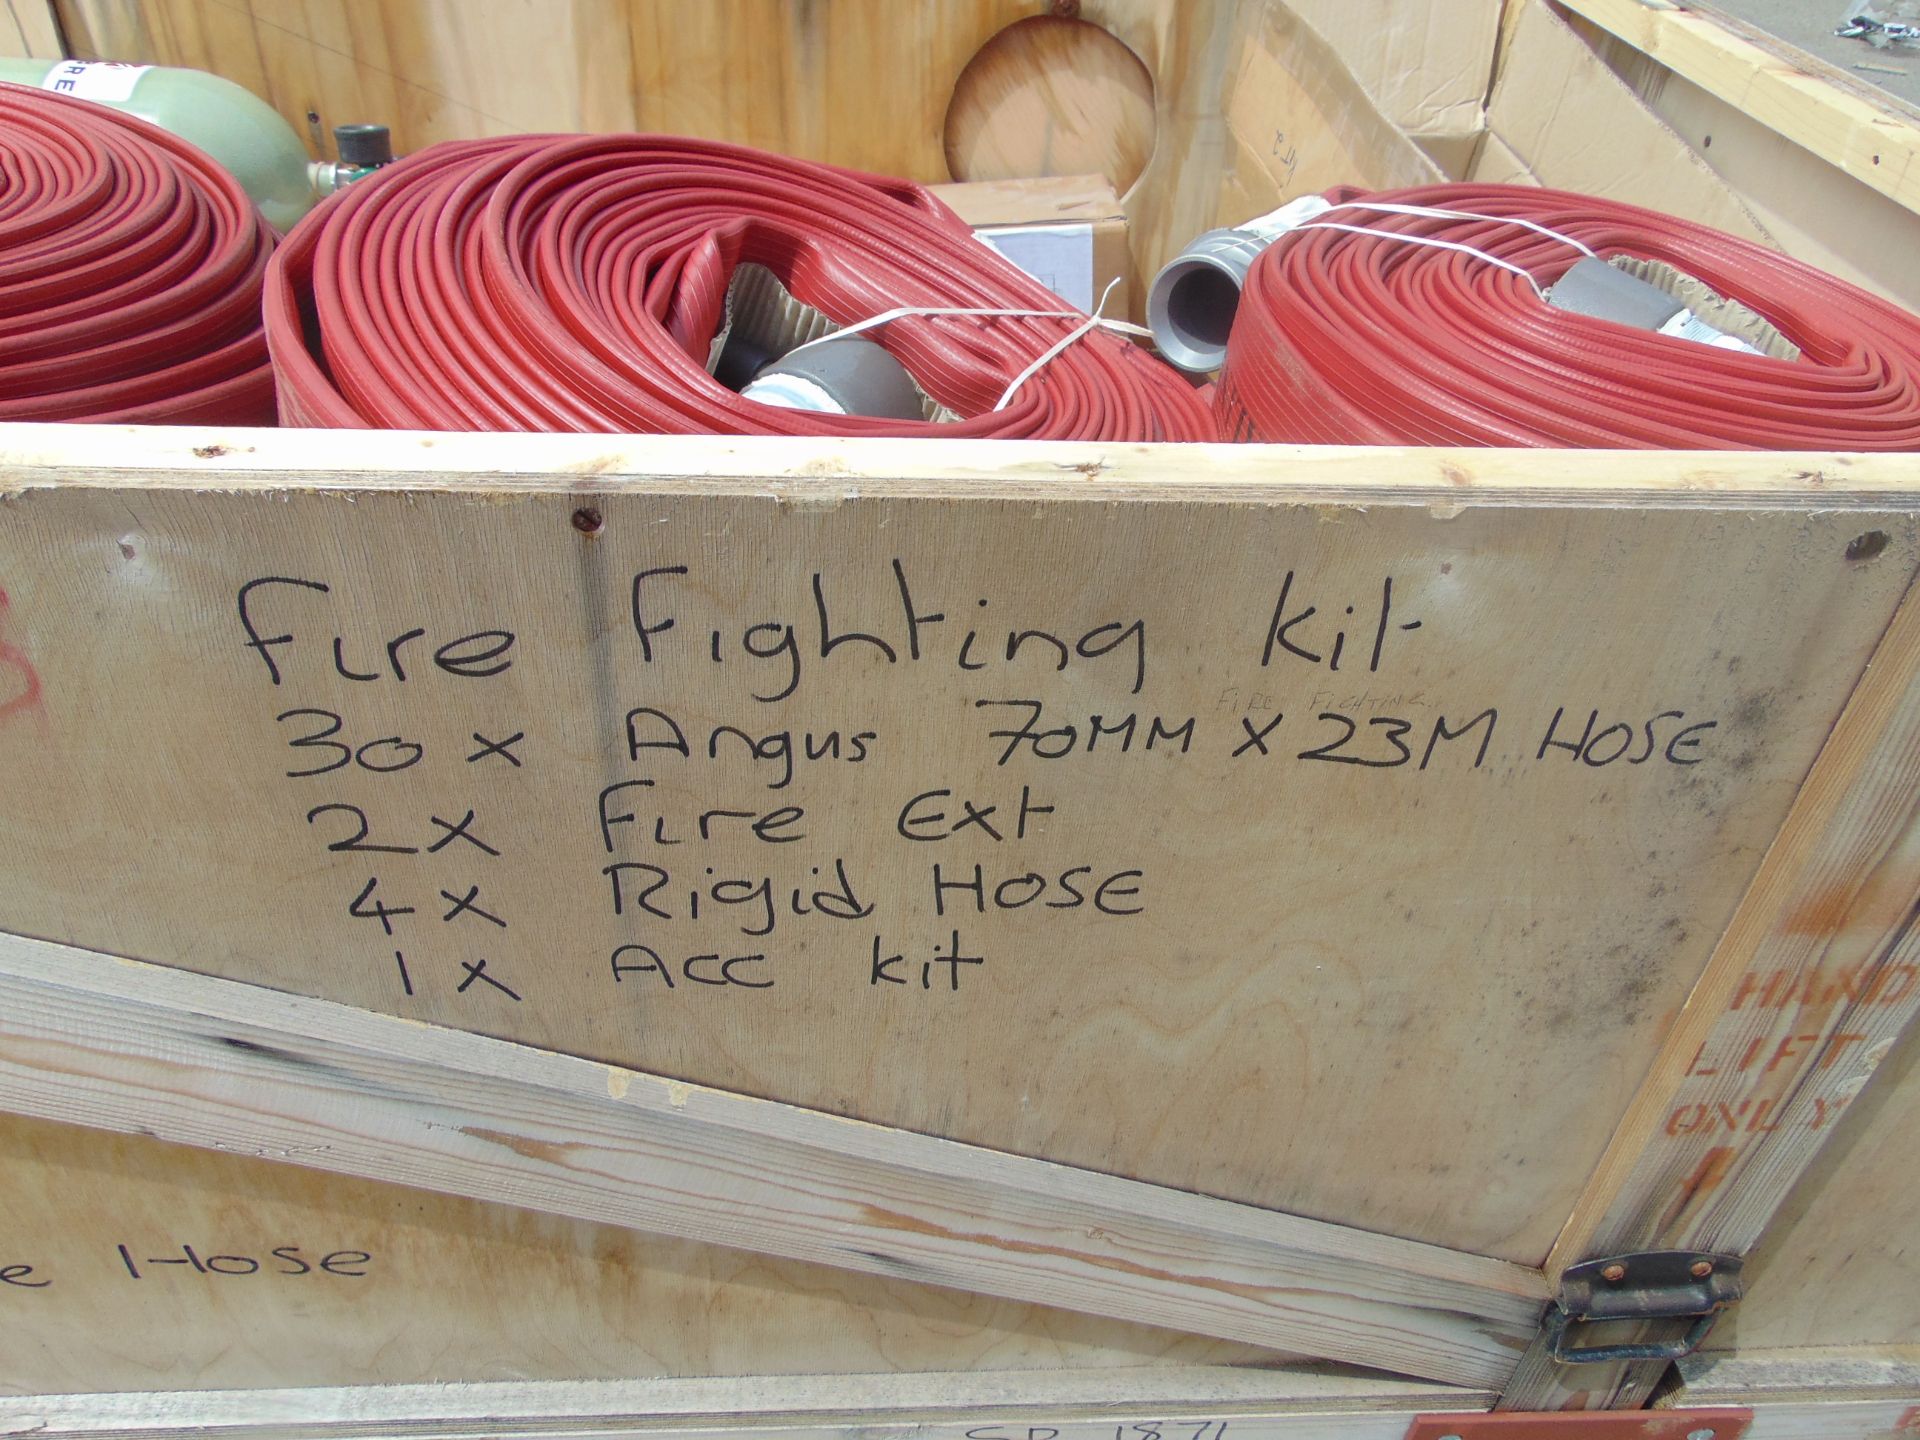 Firefighting Kit - Image 7 of 8